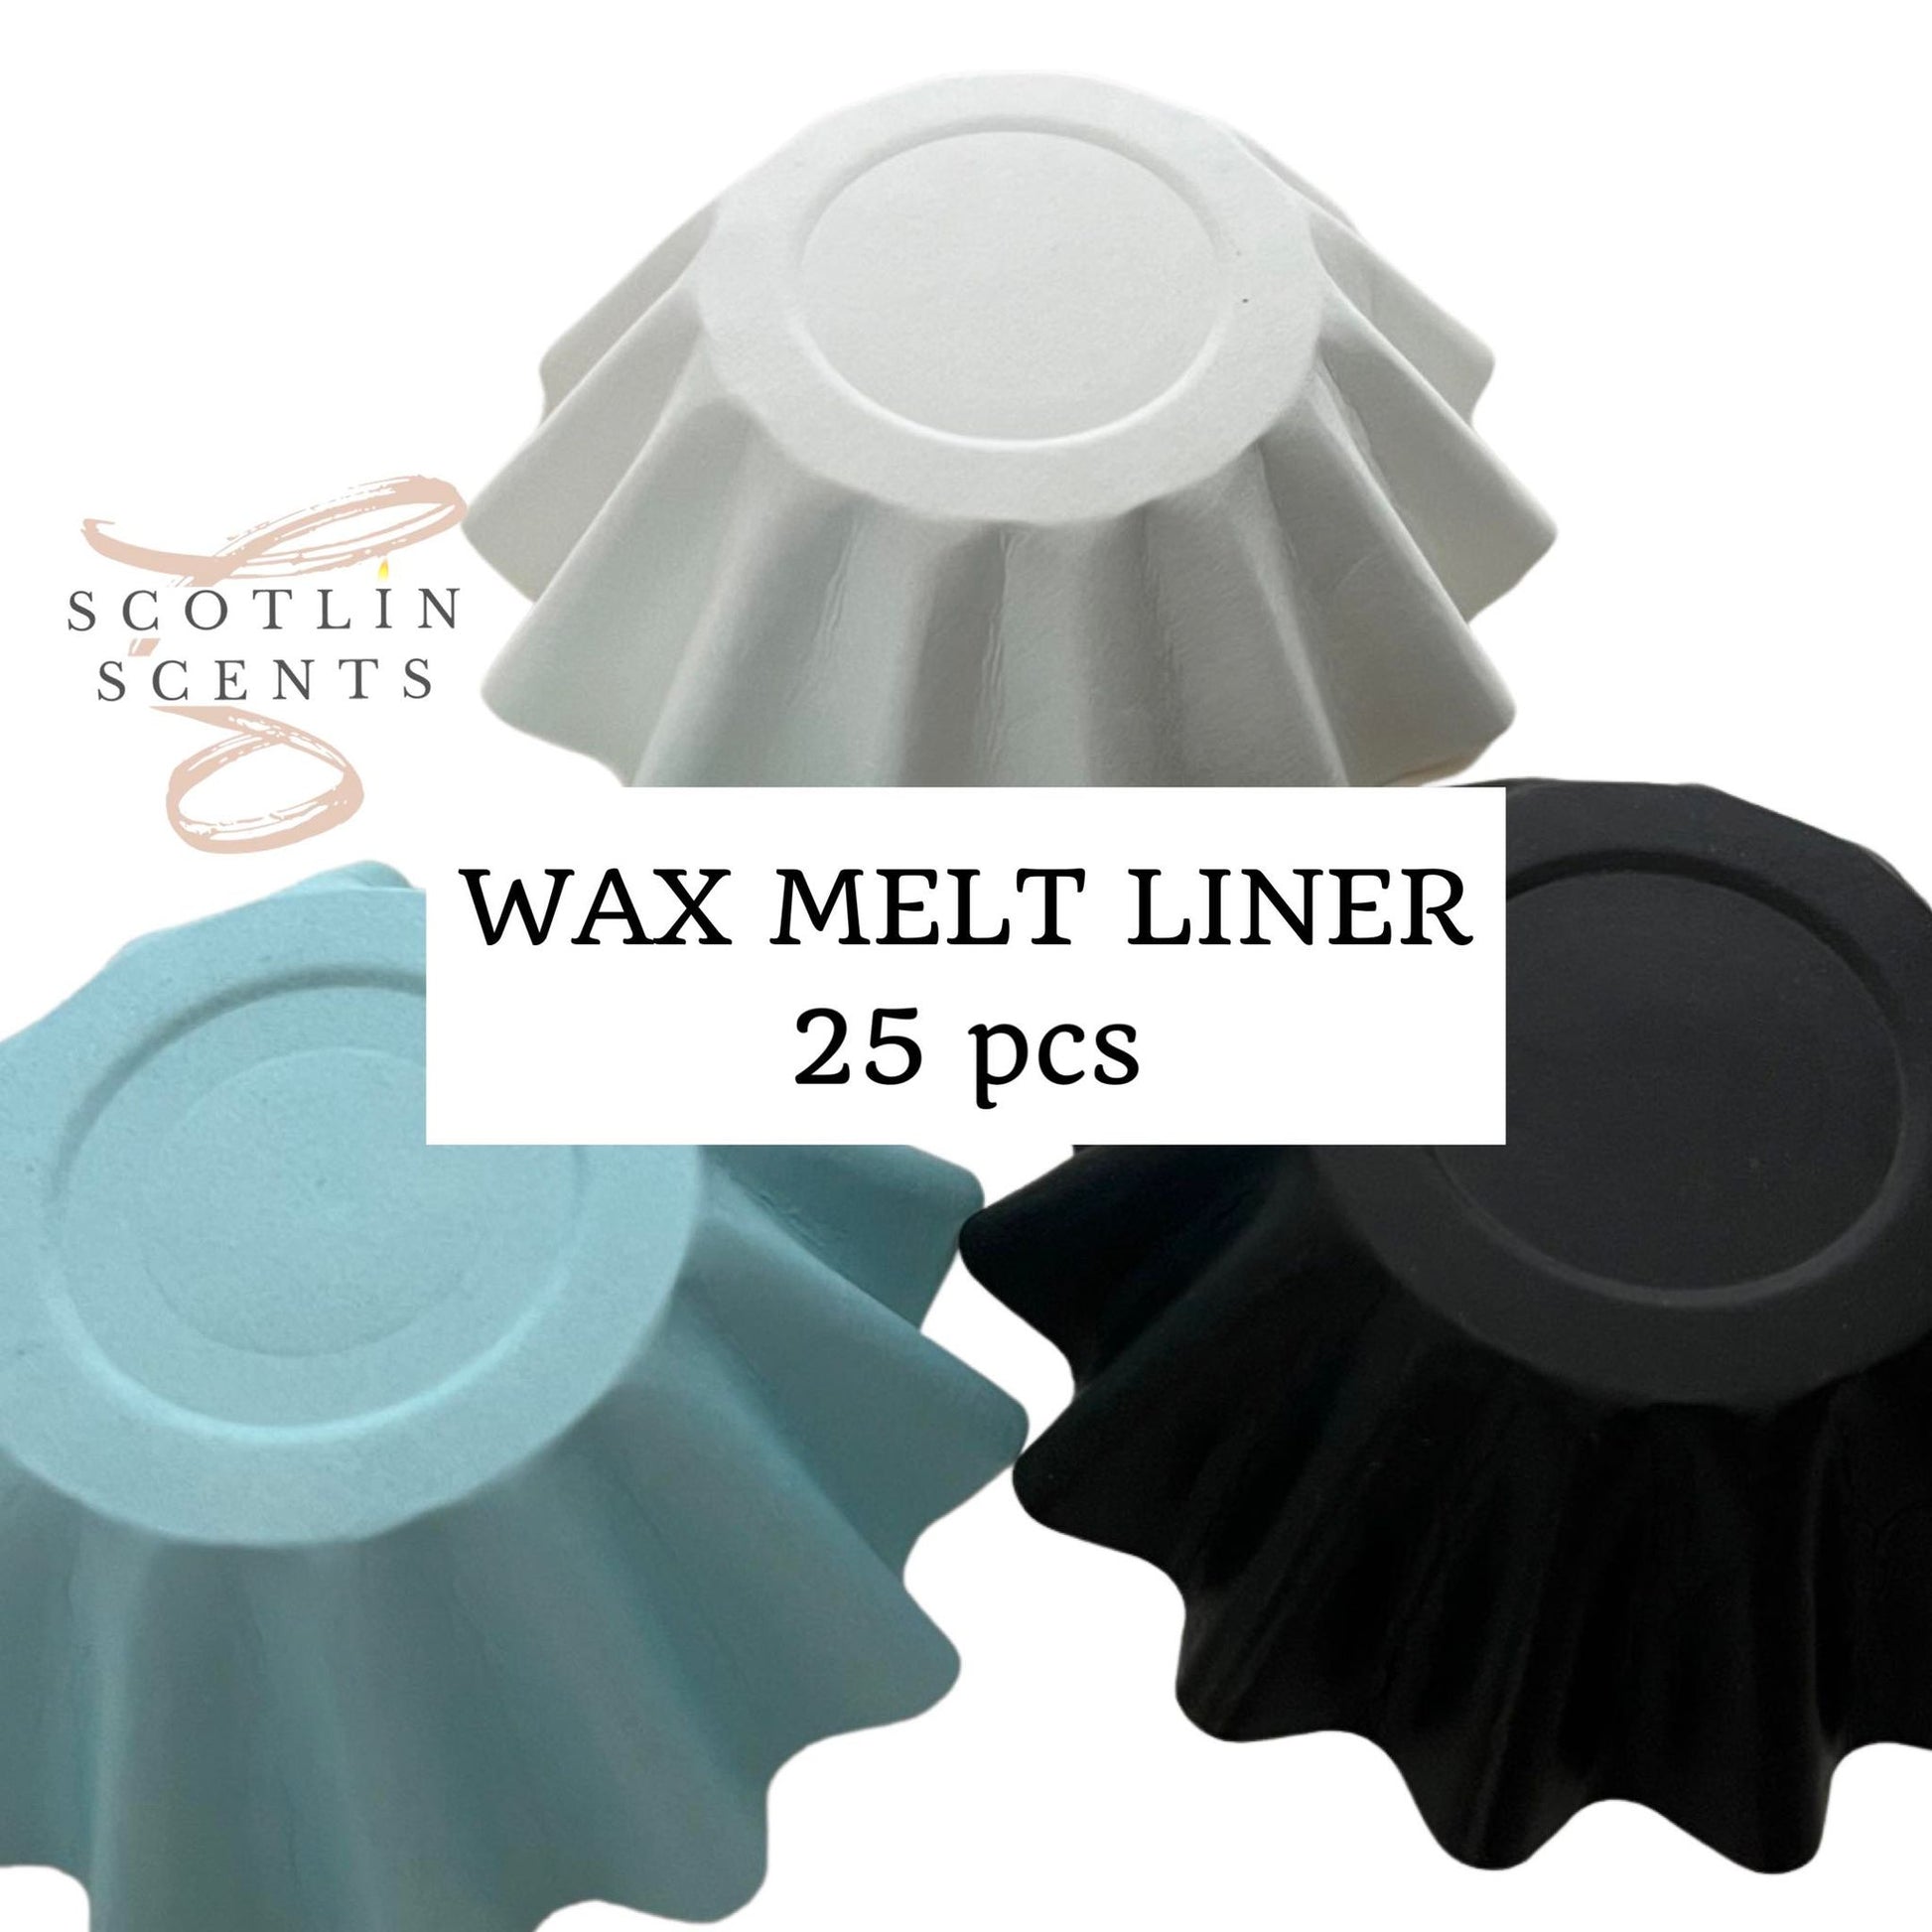 WAX MELT LINERS – 375 Wax Melts, LLC